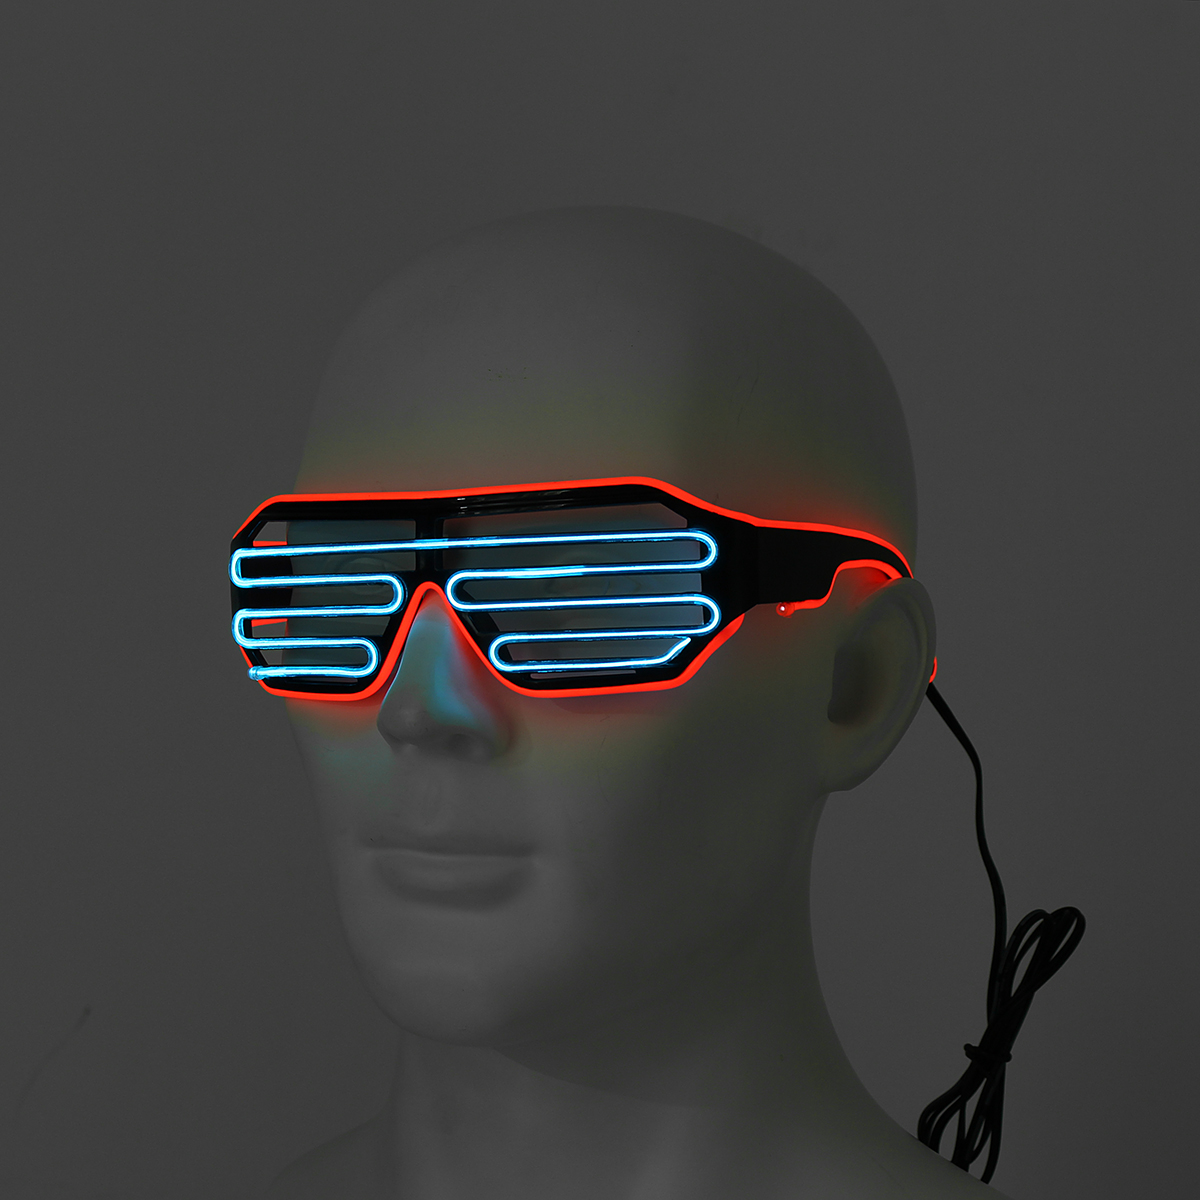 Sound-Control-Flash-EL-Wire-Glasses-Neon-LED-Light-Up-Shutter-Glow-Frame-Glasses-1200853